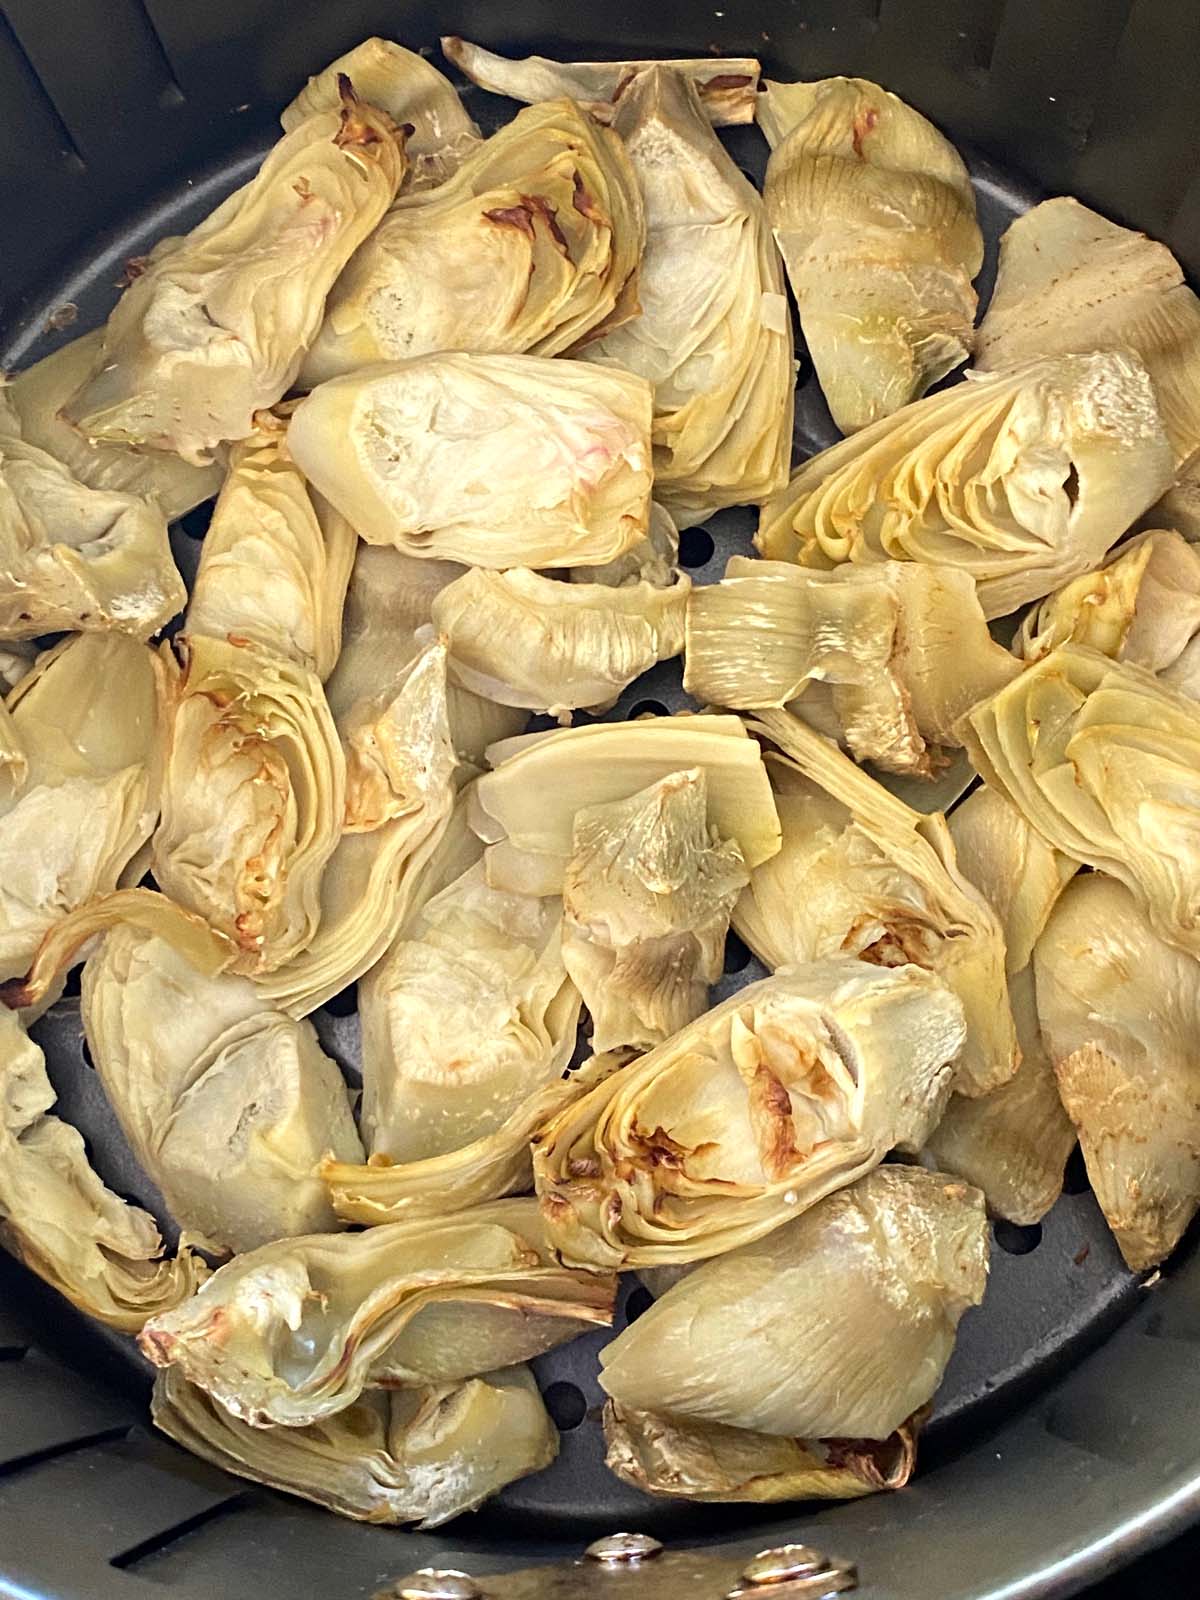 Cooked artichoke hearts in an air fryer.